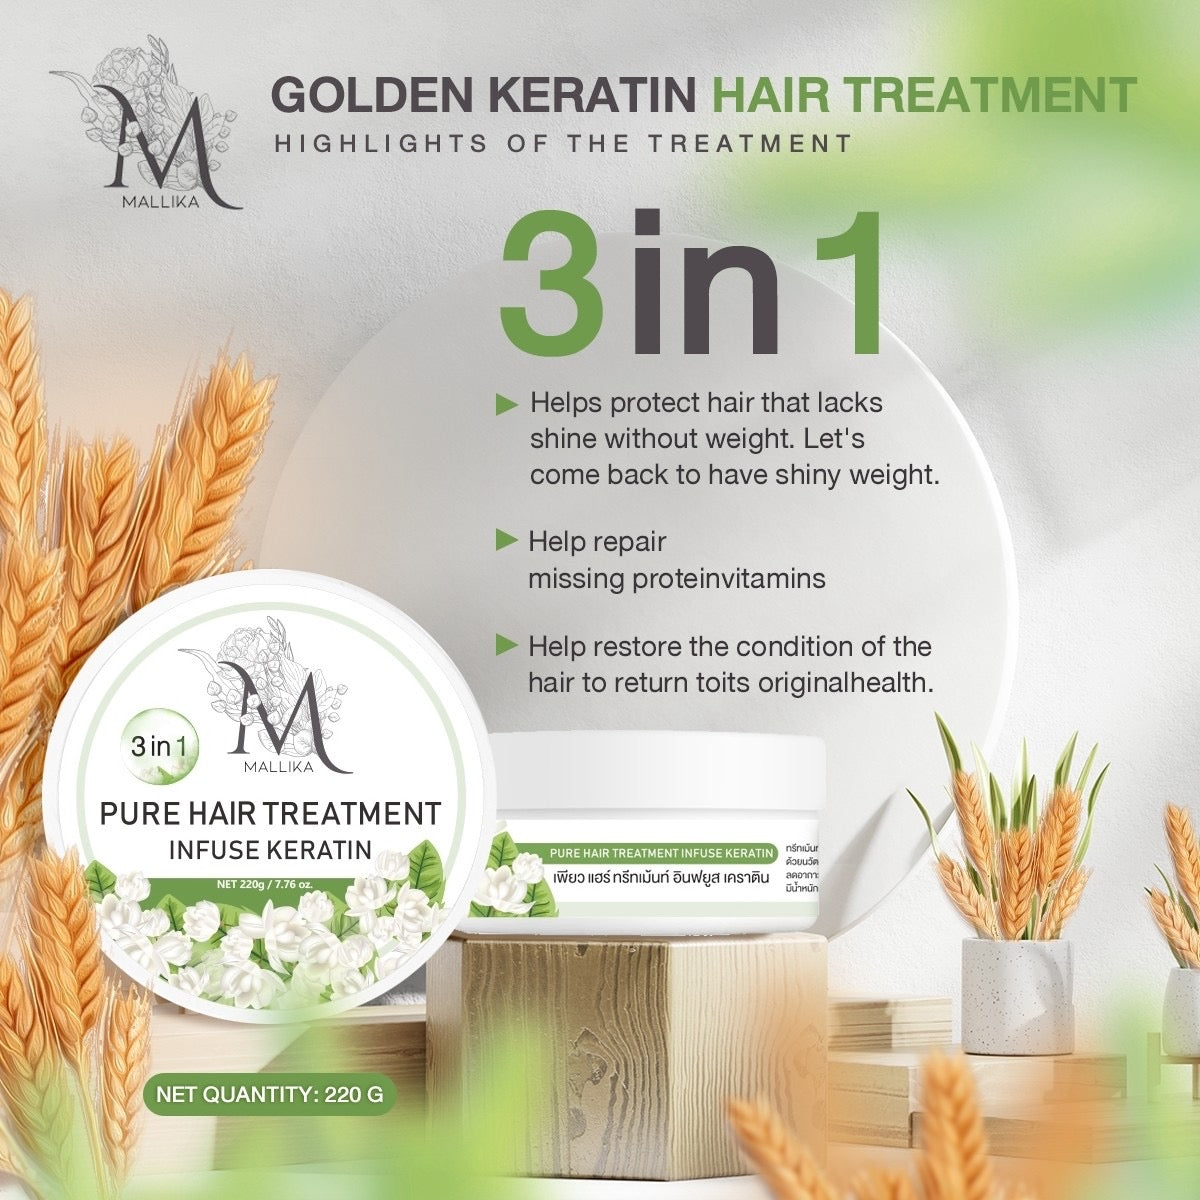 PURE HAIR TREATMENT infuse keratin